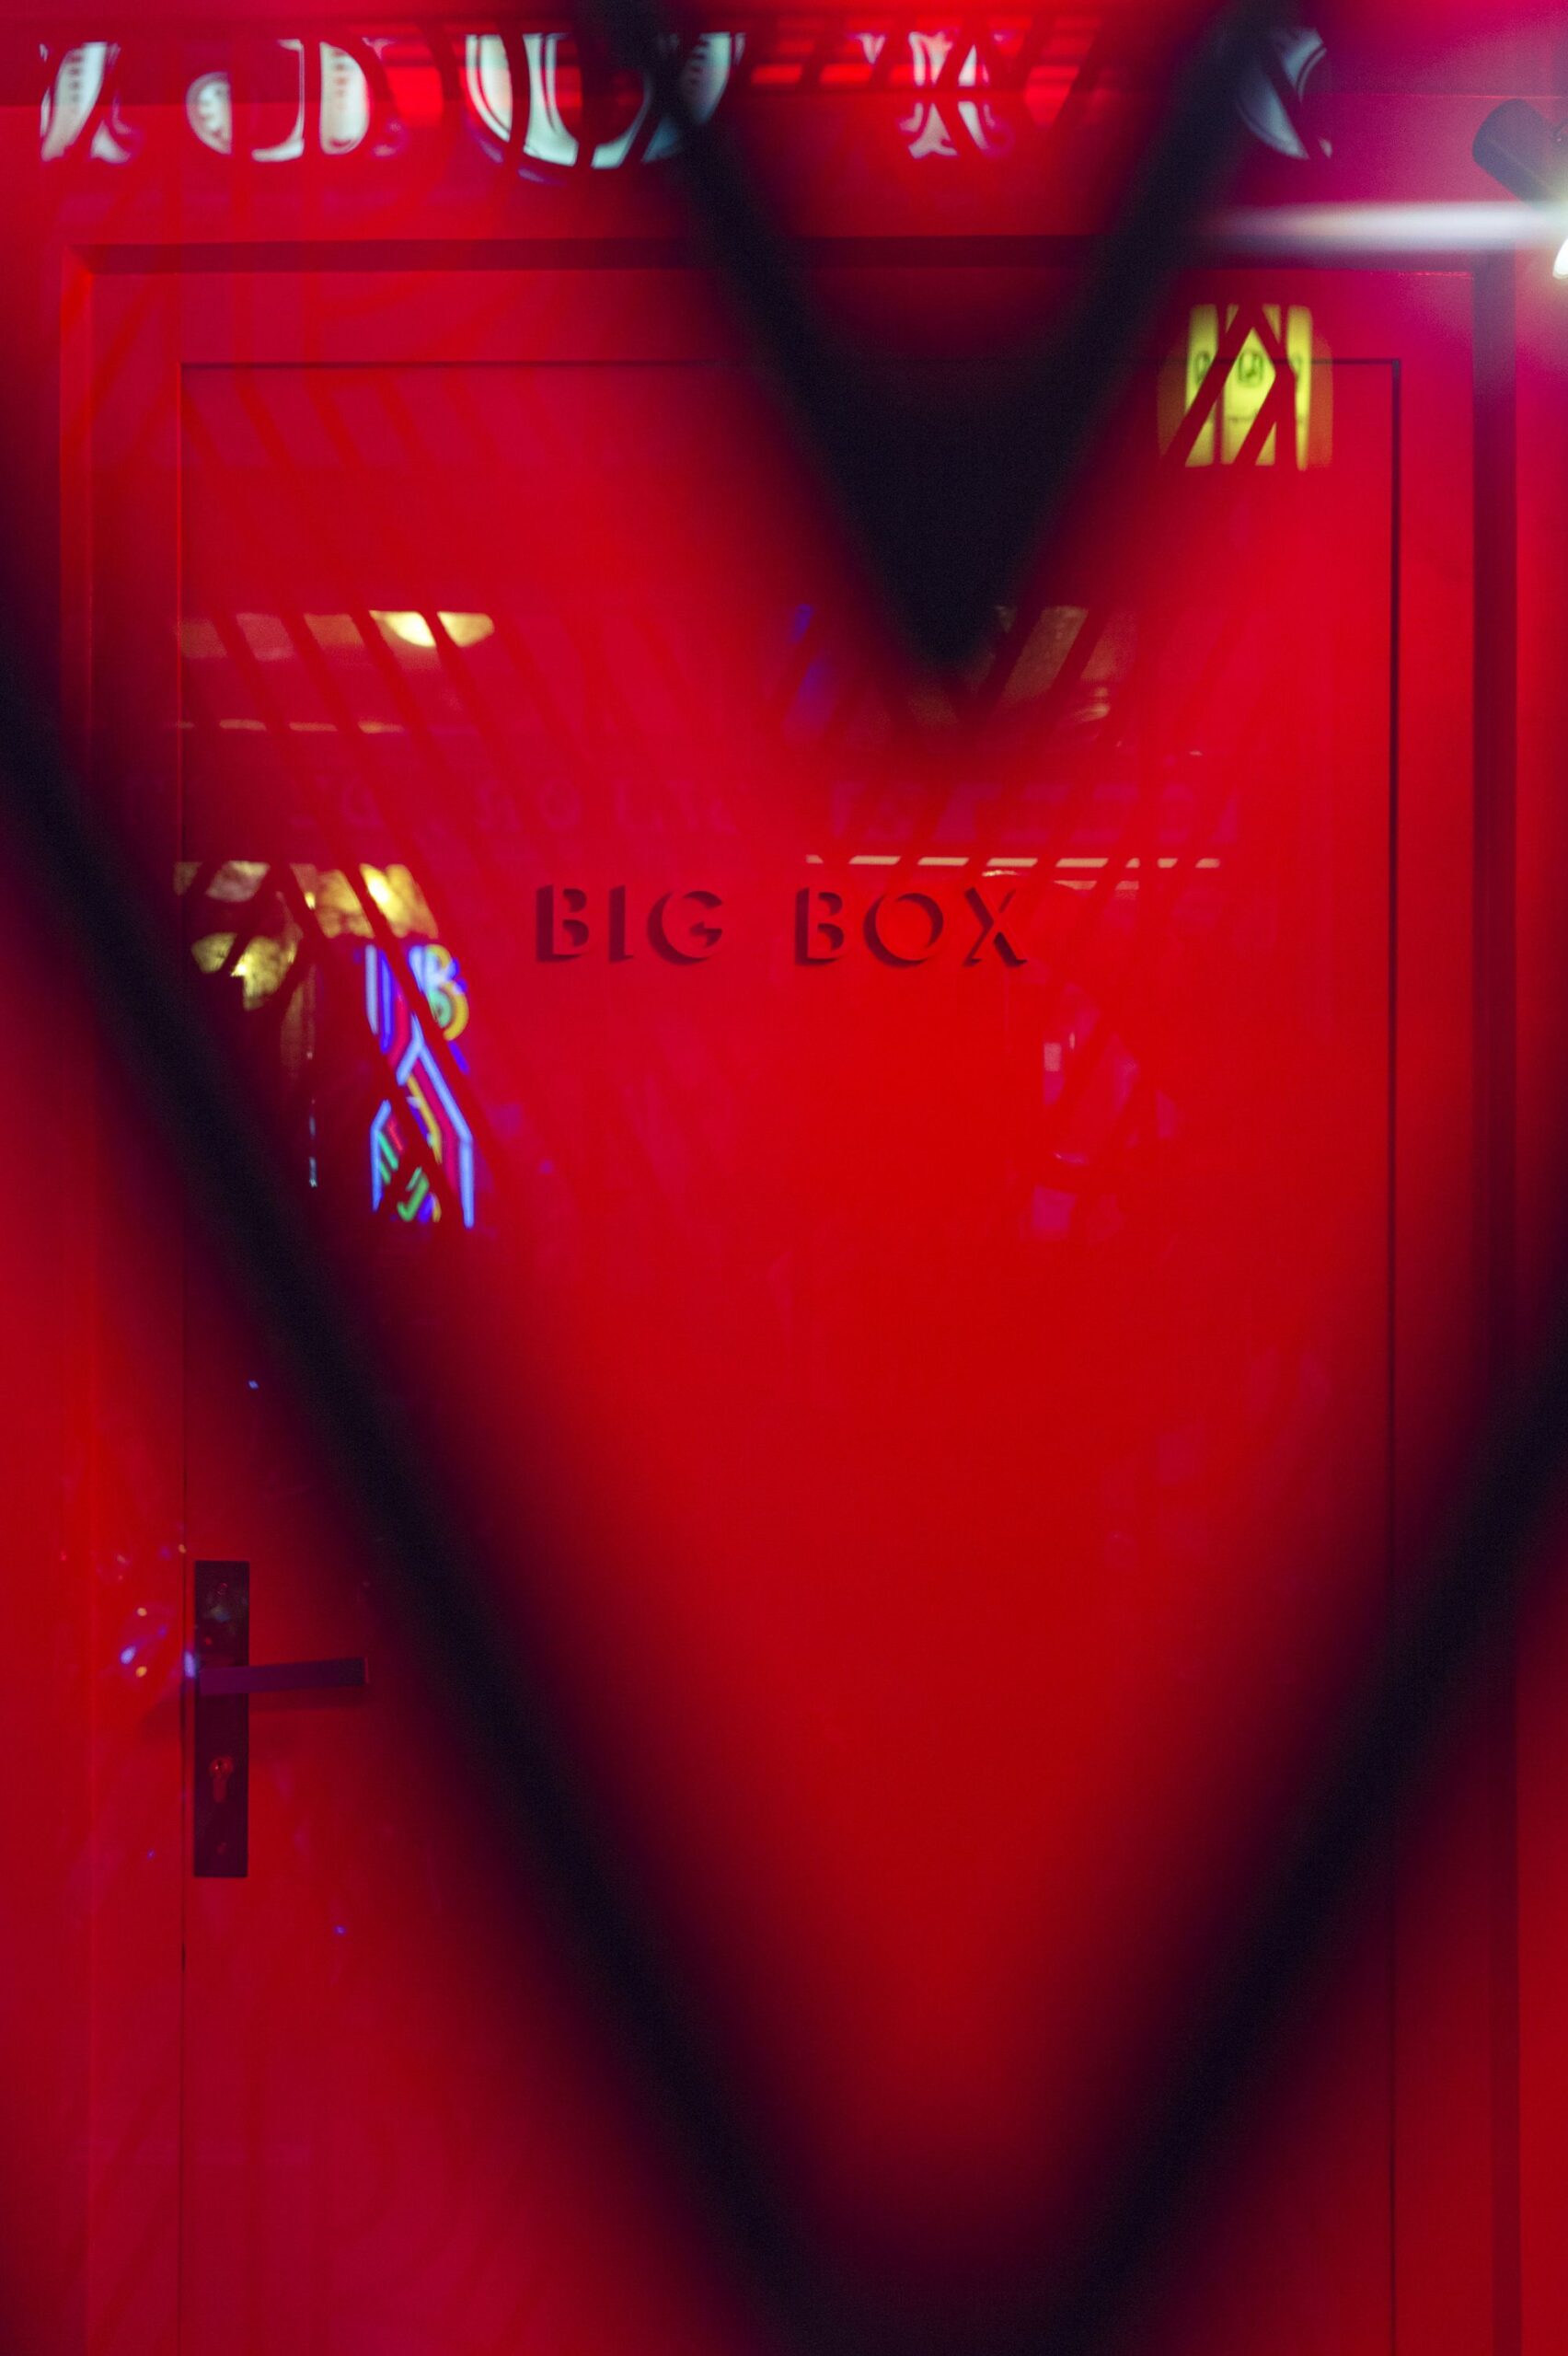 BAM Karaoké Box et BAM Big Box, 30 rue Richer, 75009 Paris - Photo 3